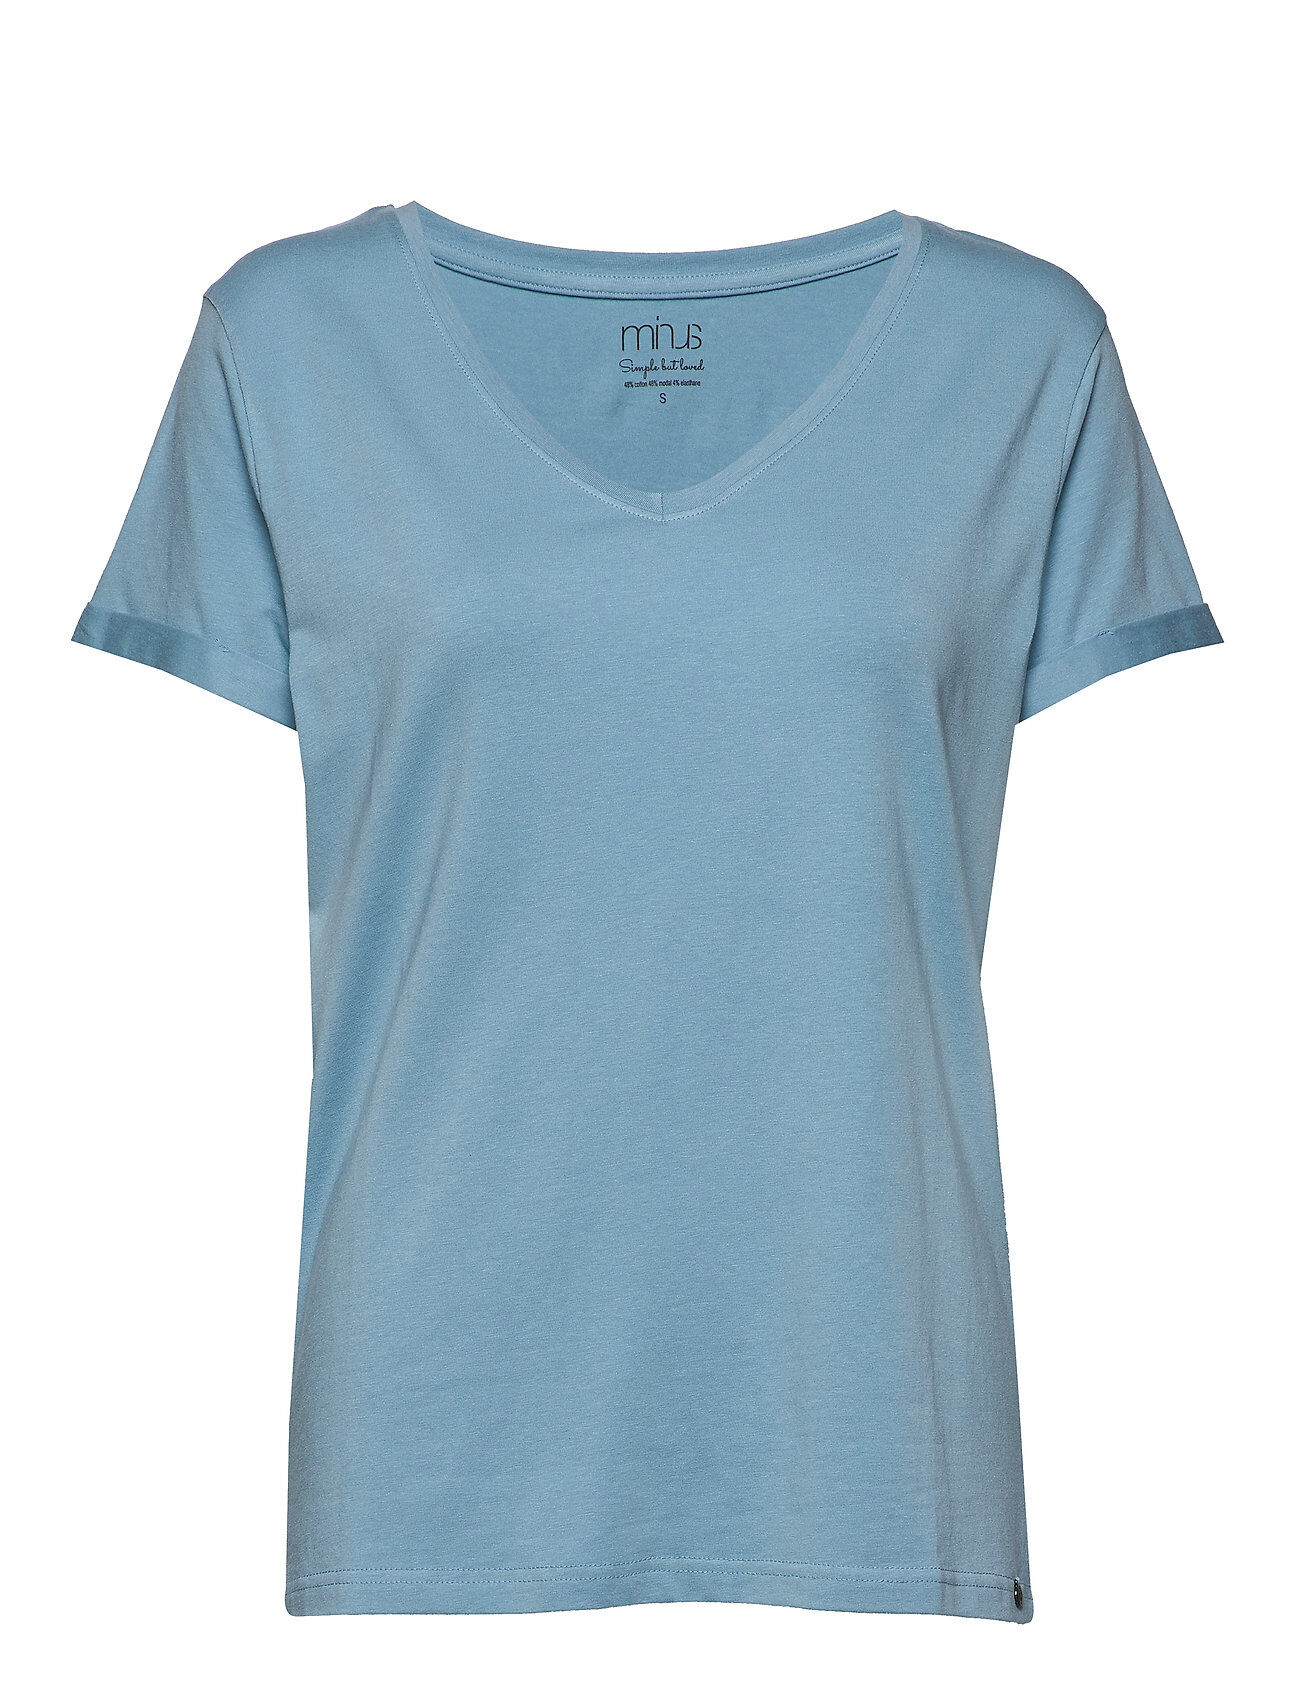 Minus Adele Tee T-shirts & Tops Short-sleeved Blå Minus